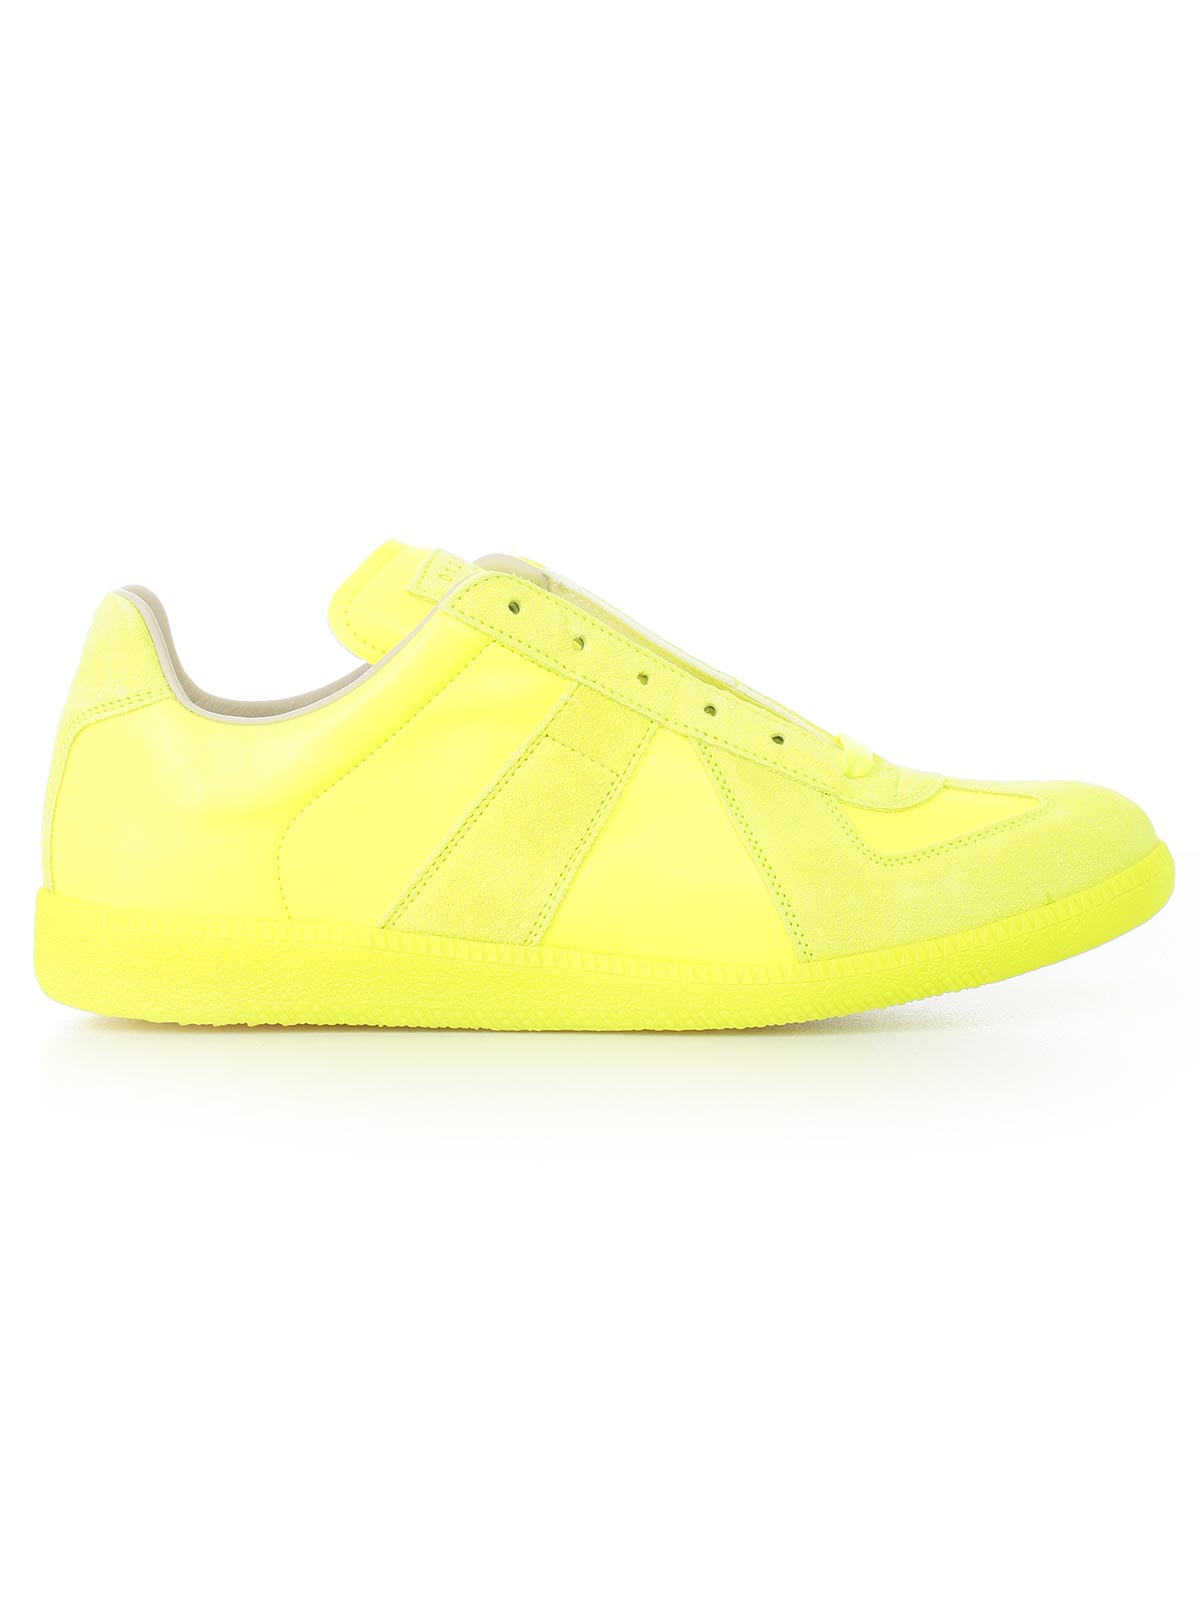 yellow margiela sneakers